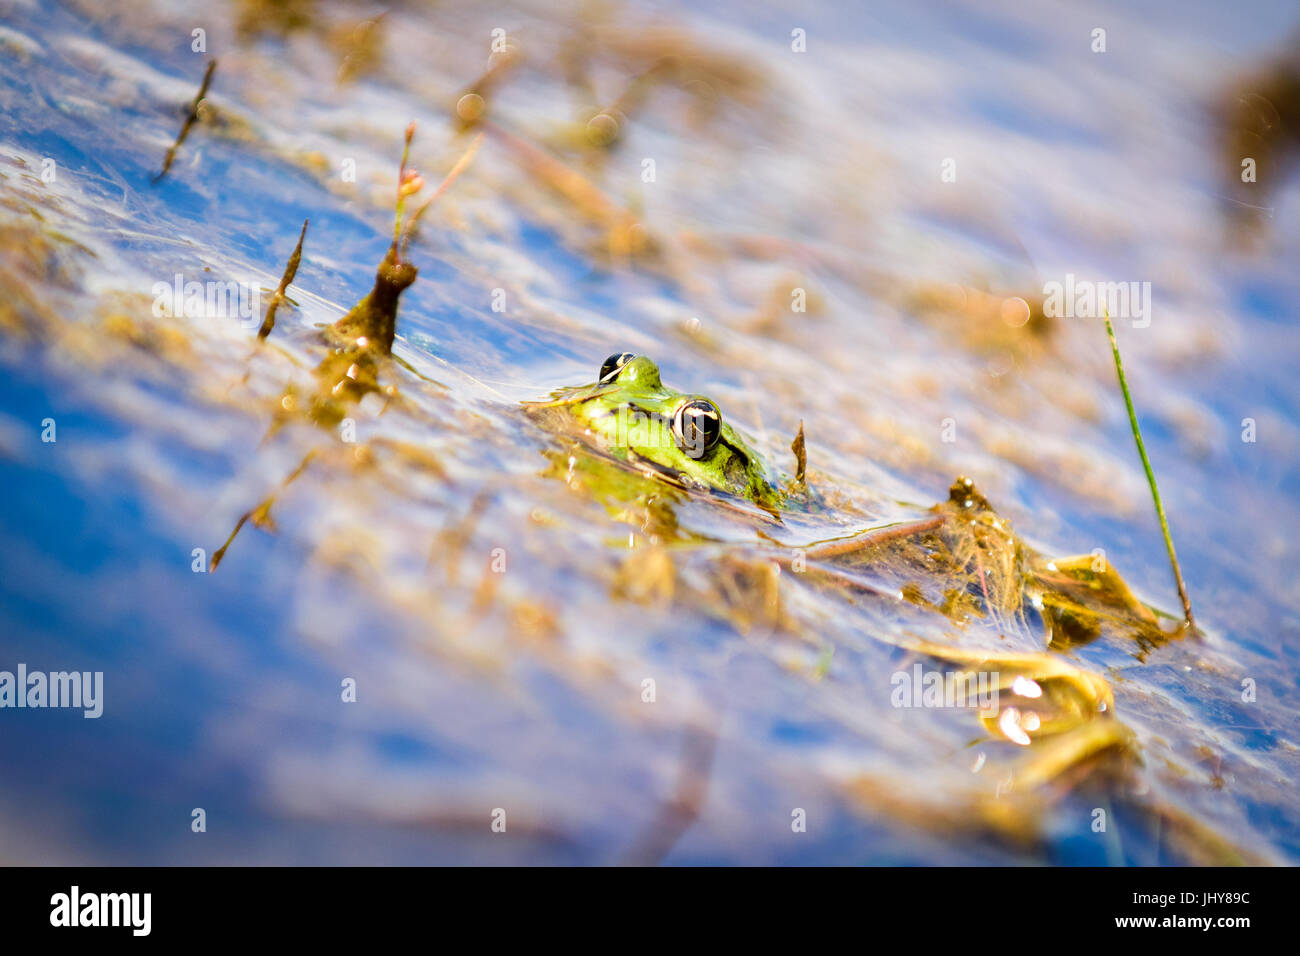 Common European water frog, green frog in its natural habitat, Rana esculenta Stock Photo